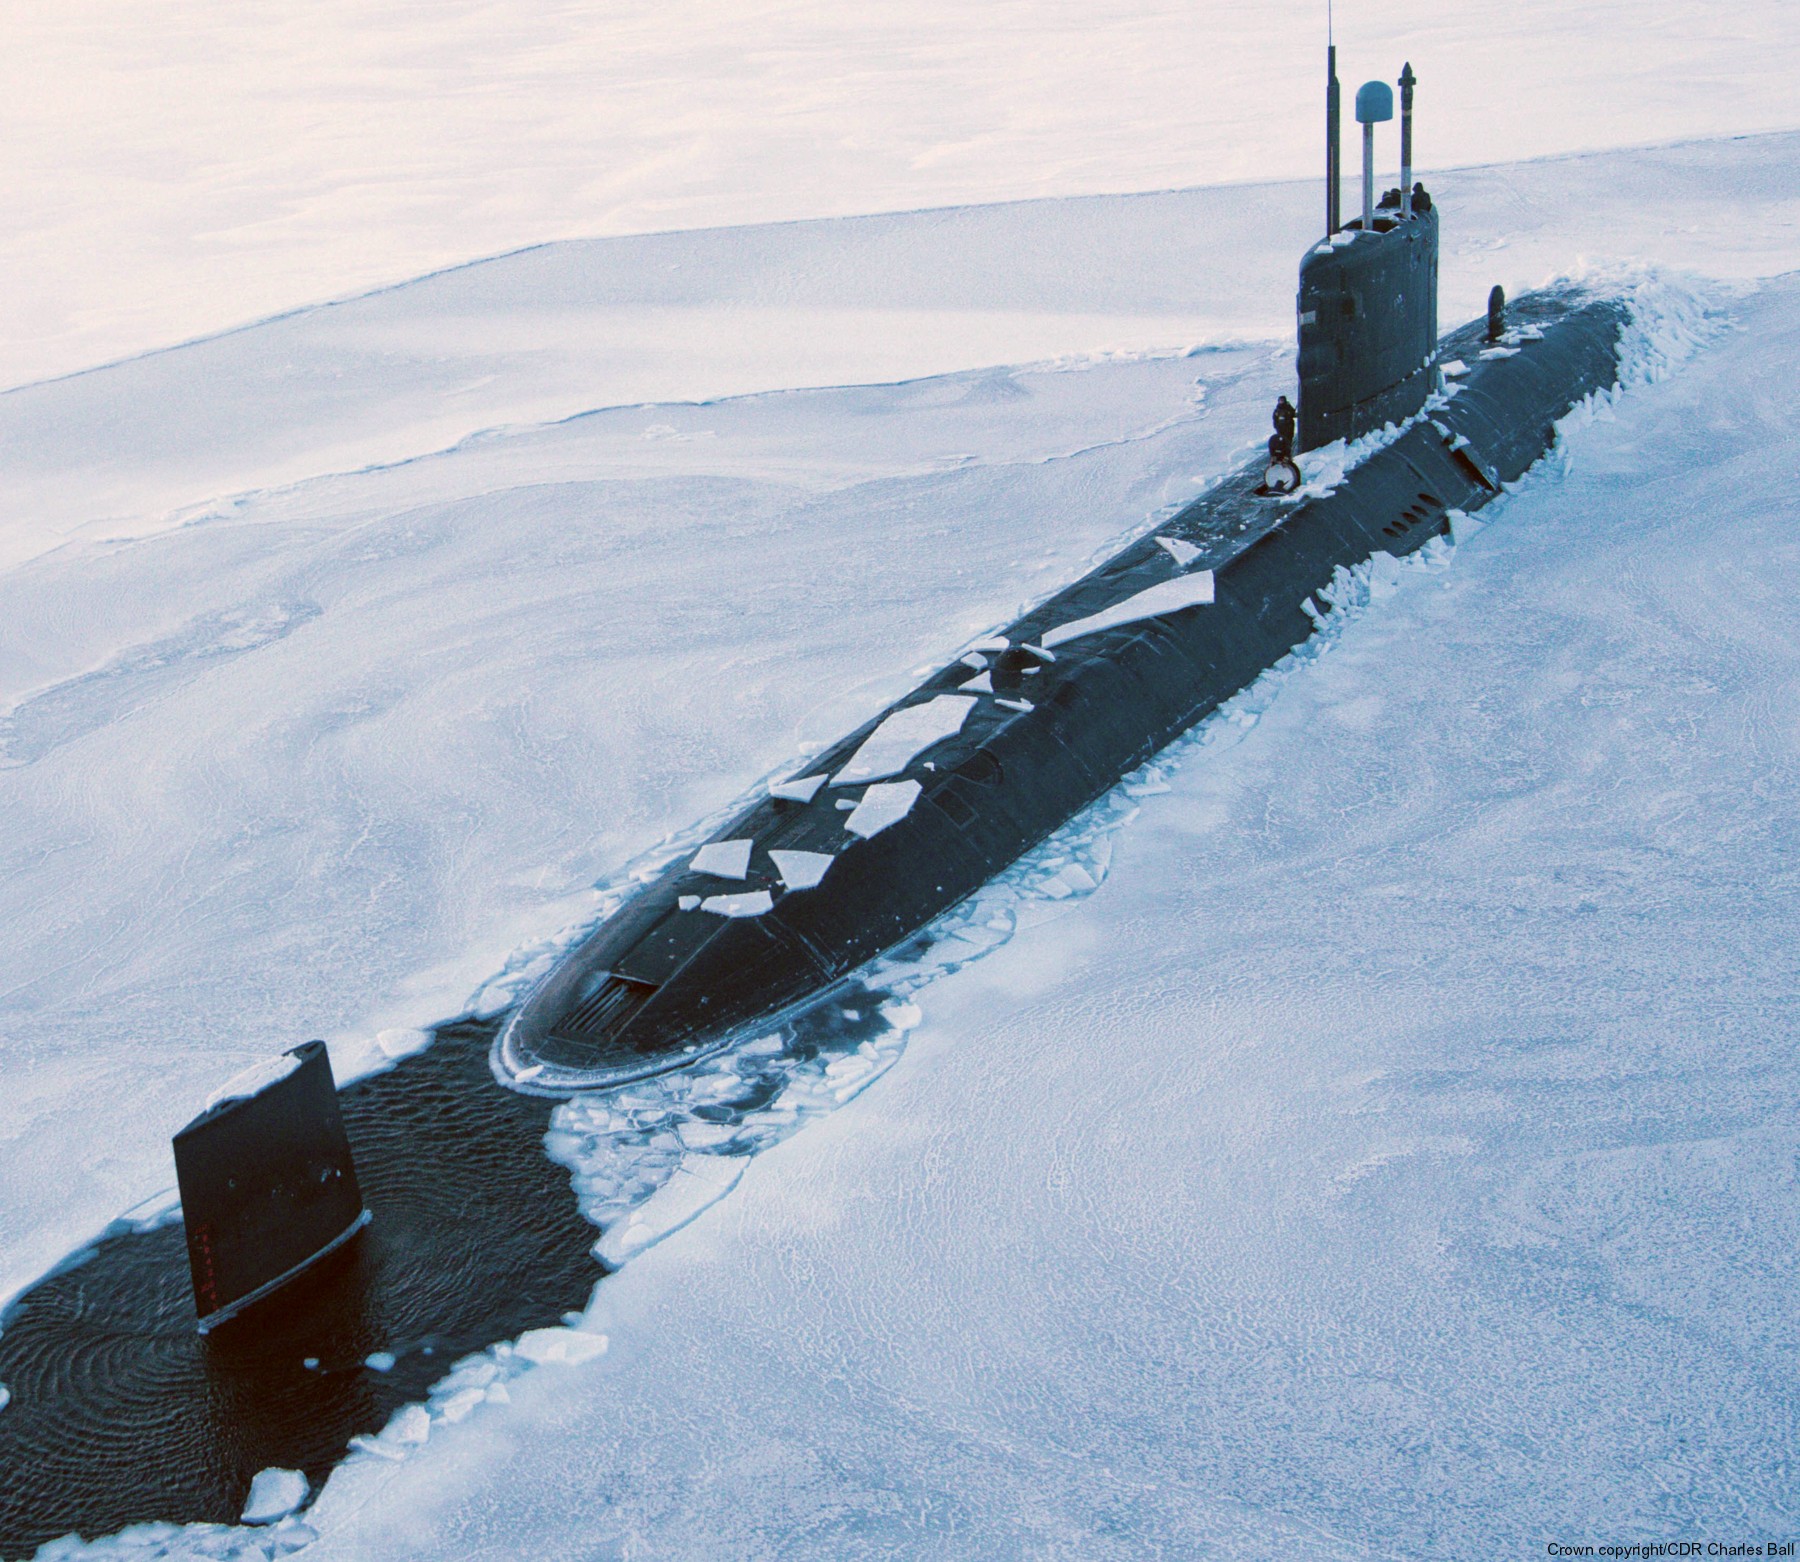 s91 hms trenchant trafalgar class attack submarine hunter killer royal navy 15